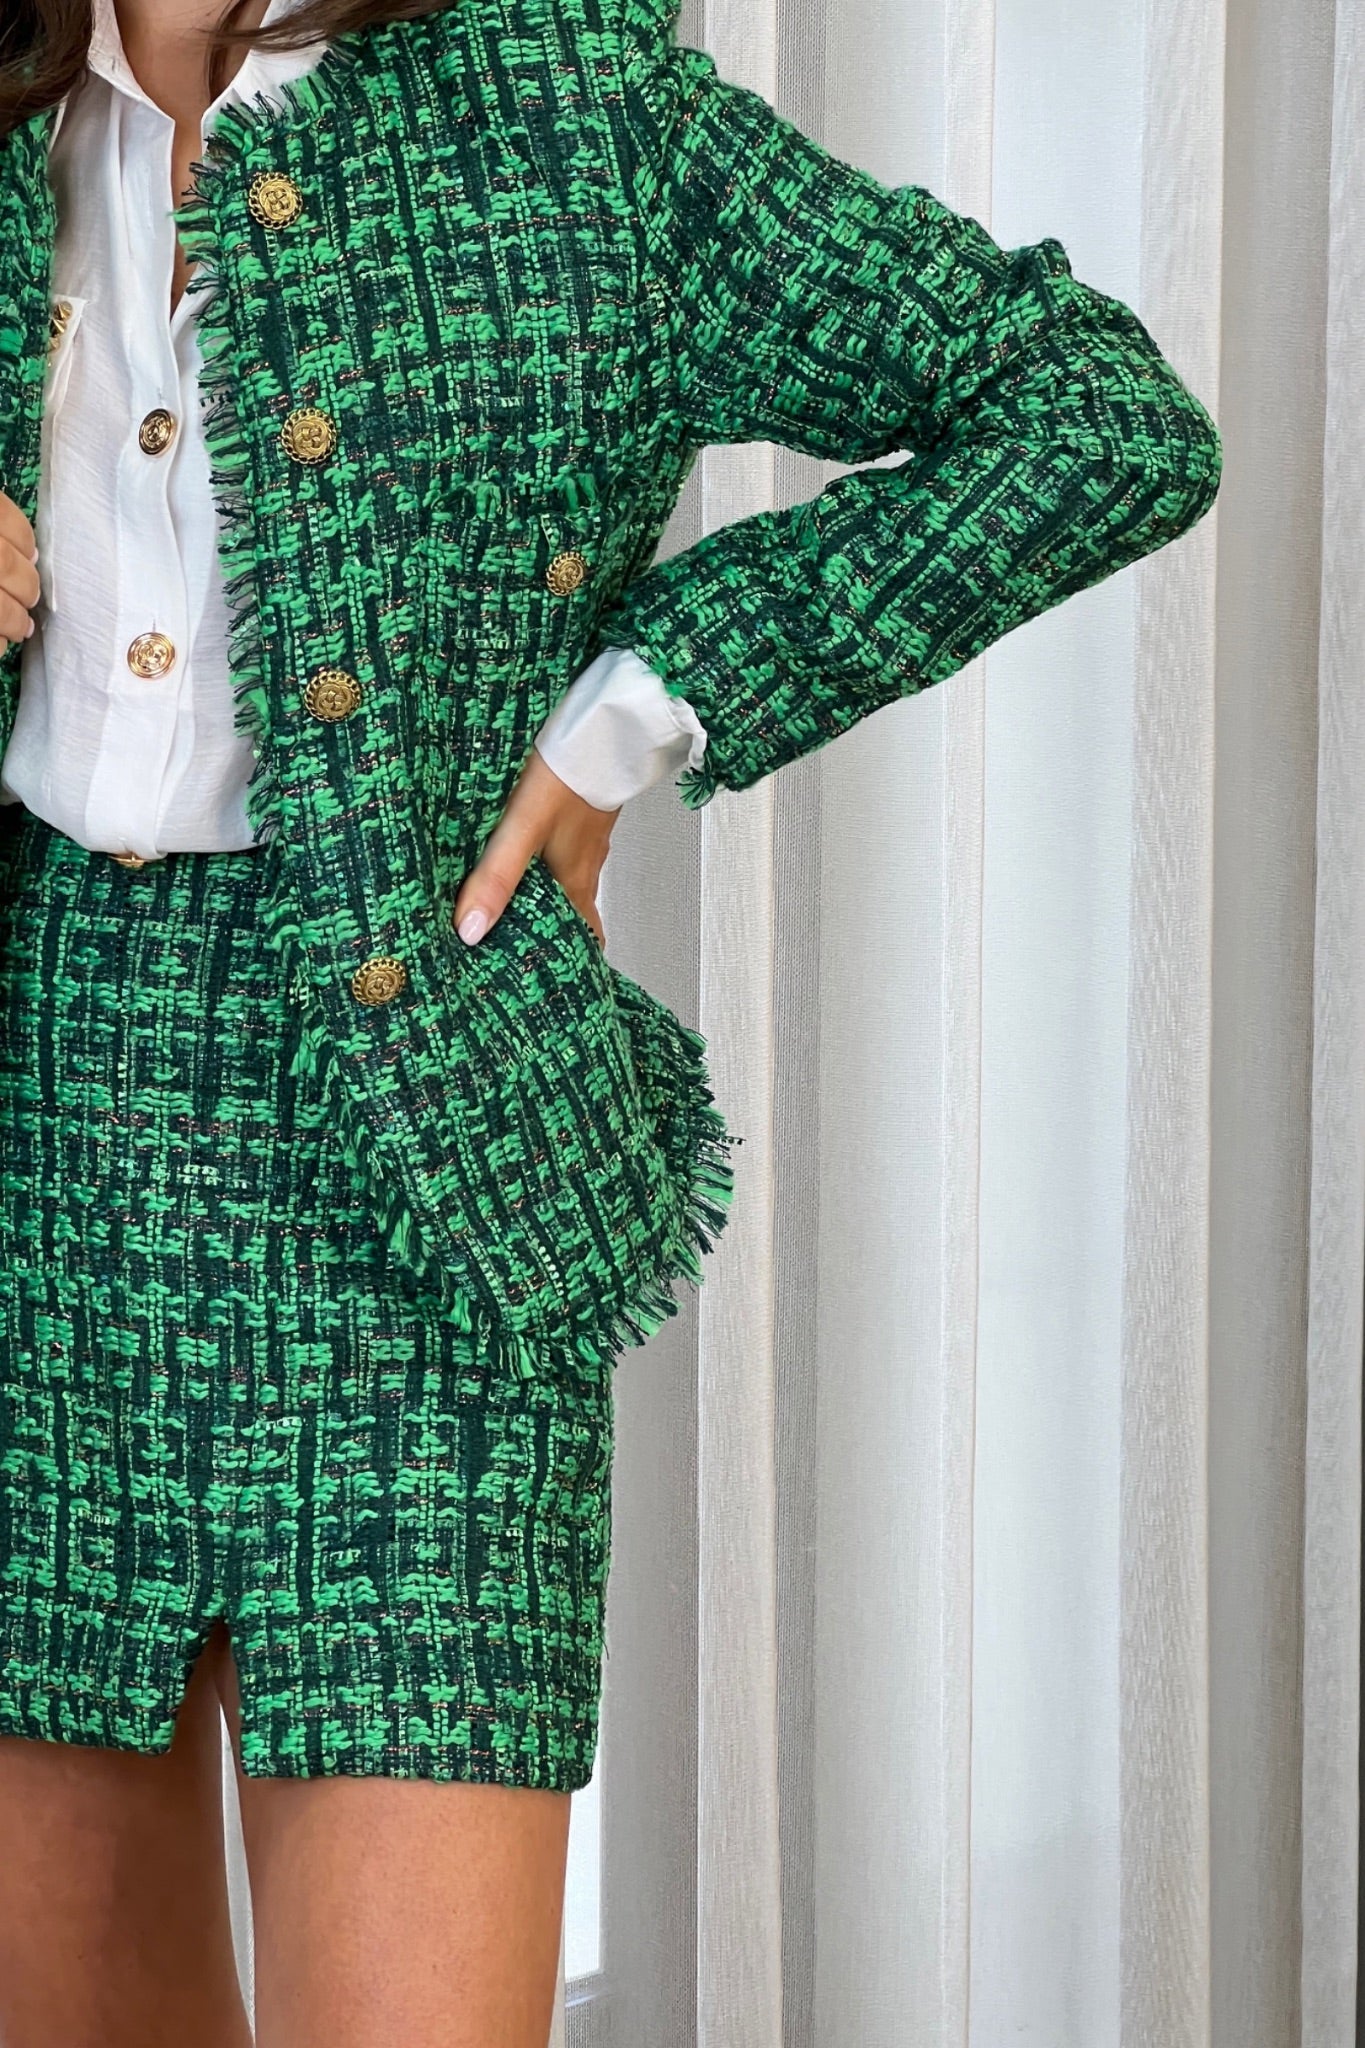 Arabella Tweed Two Piece In Green - The Walk in Wardrobe